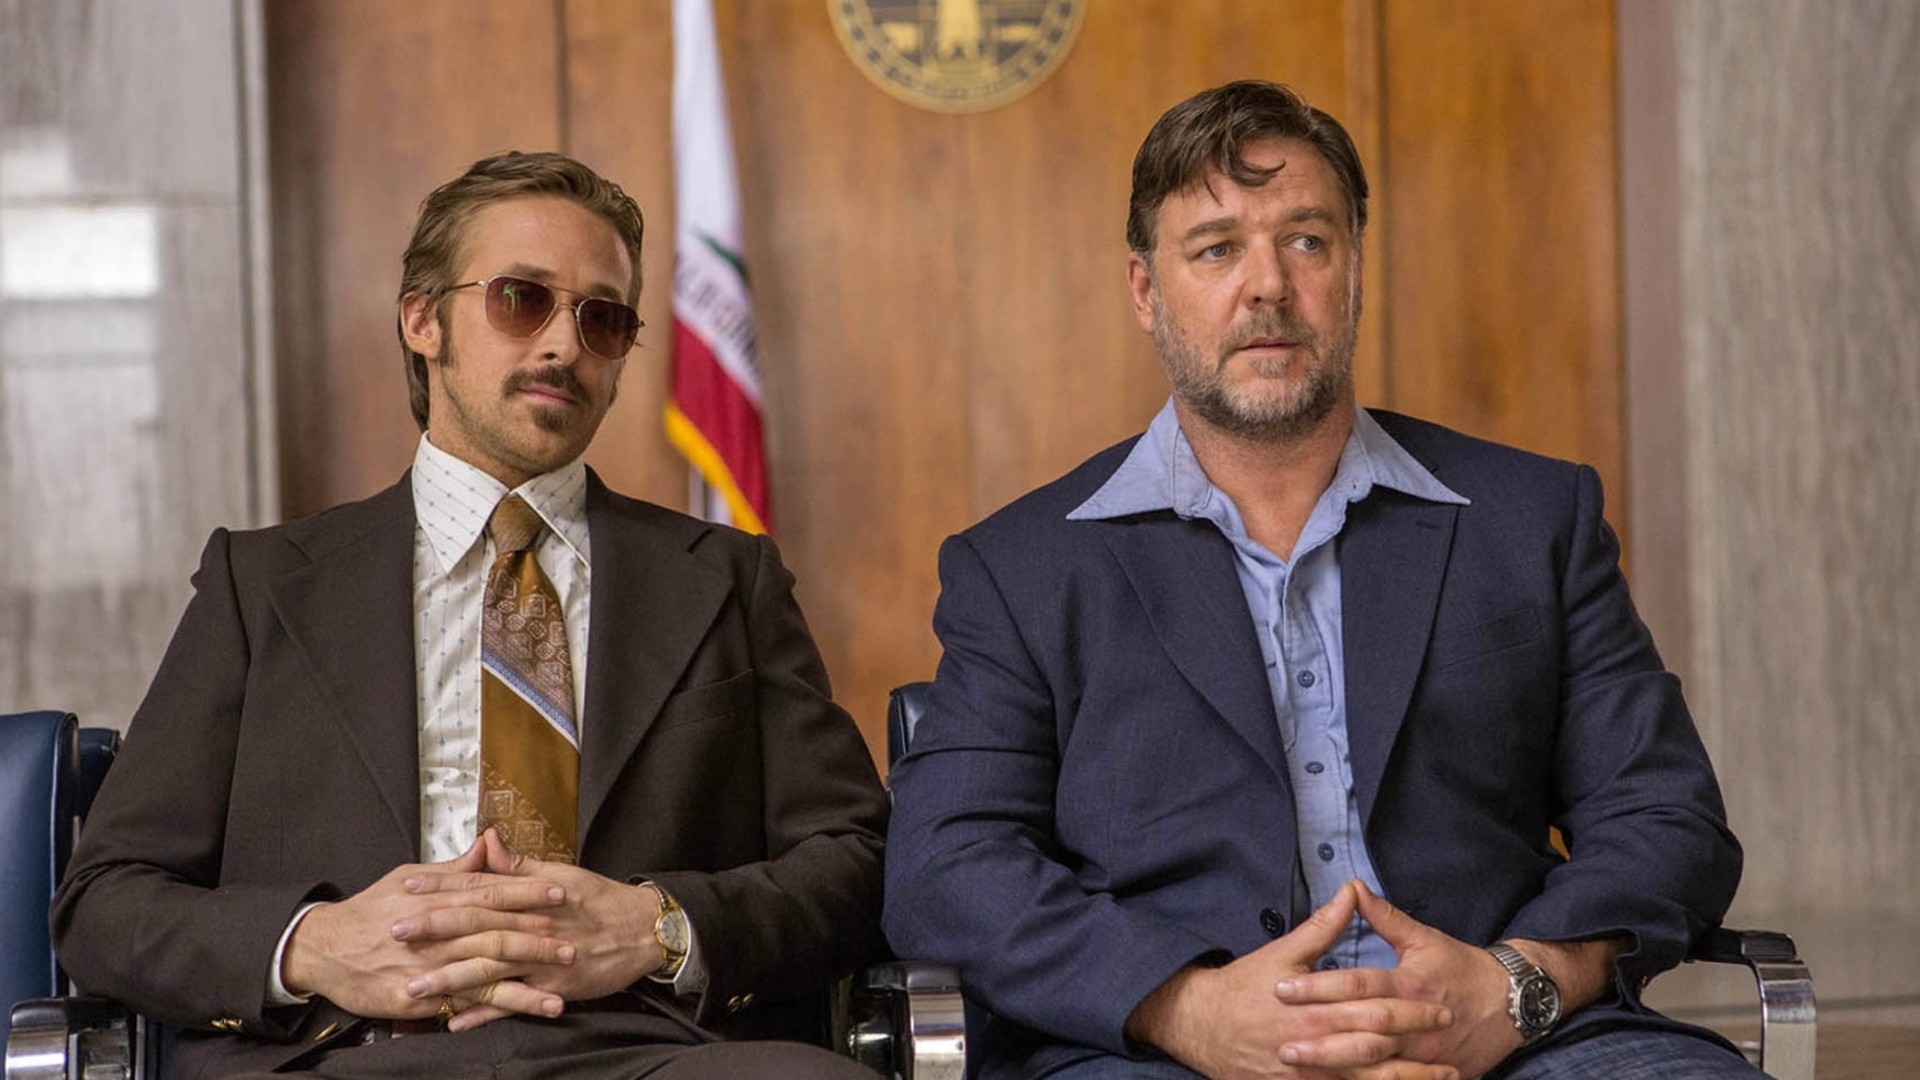 Obrázek z filmu The Nice Guys s Ryanem Goslingem a Russellem Crowem